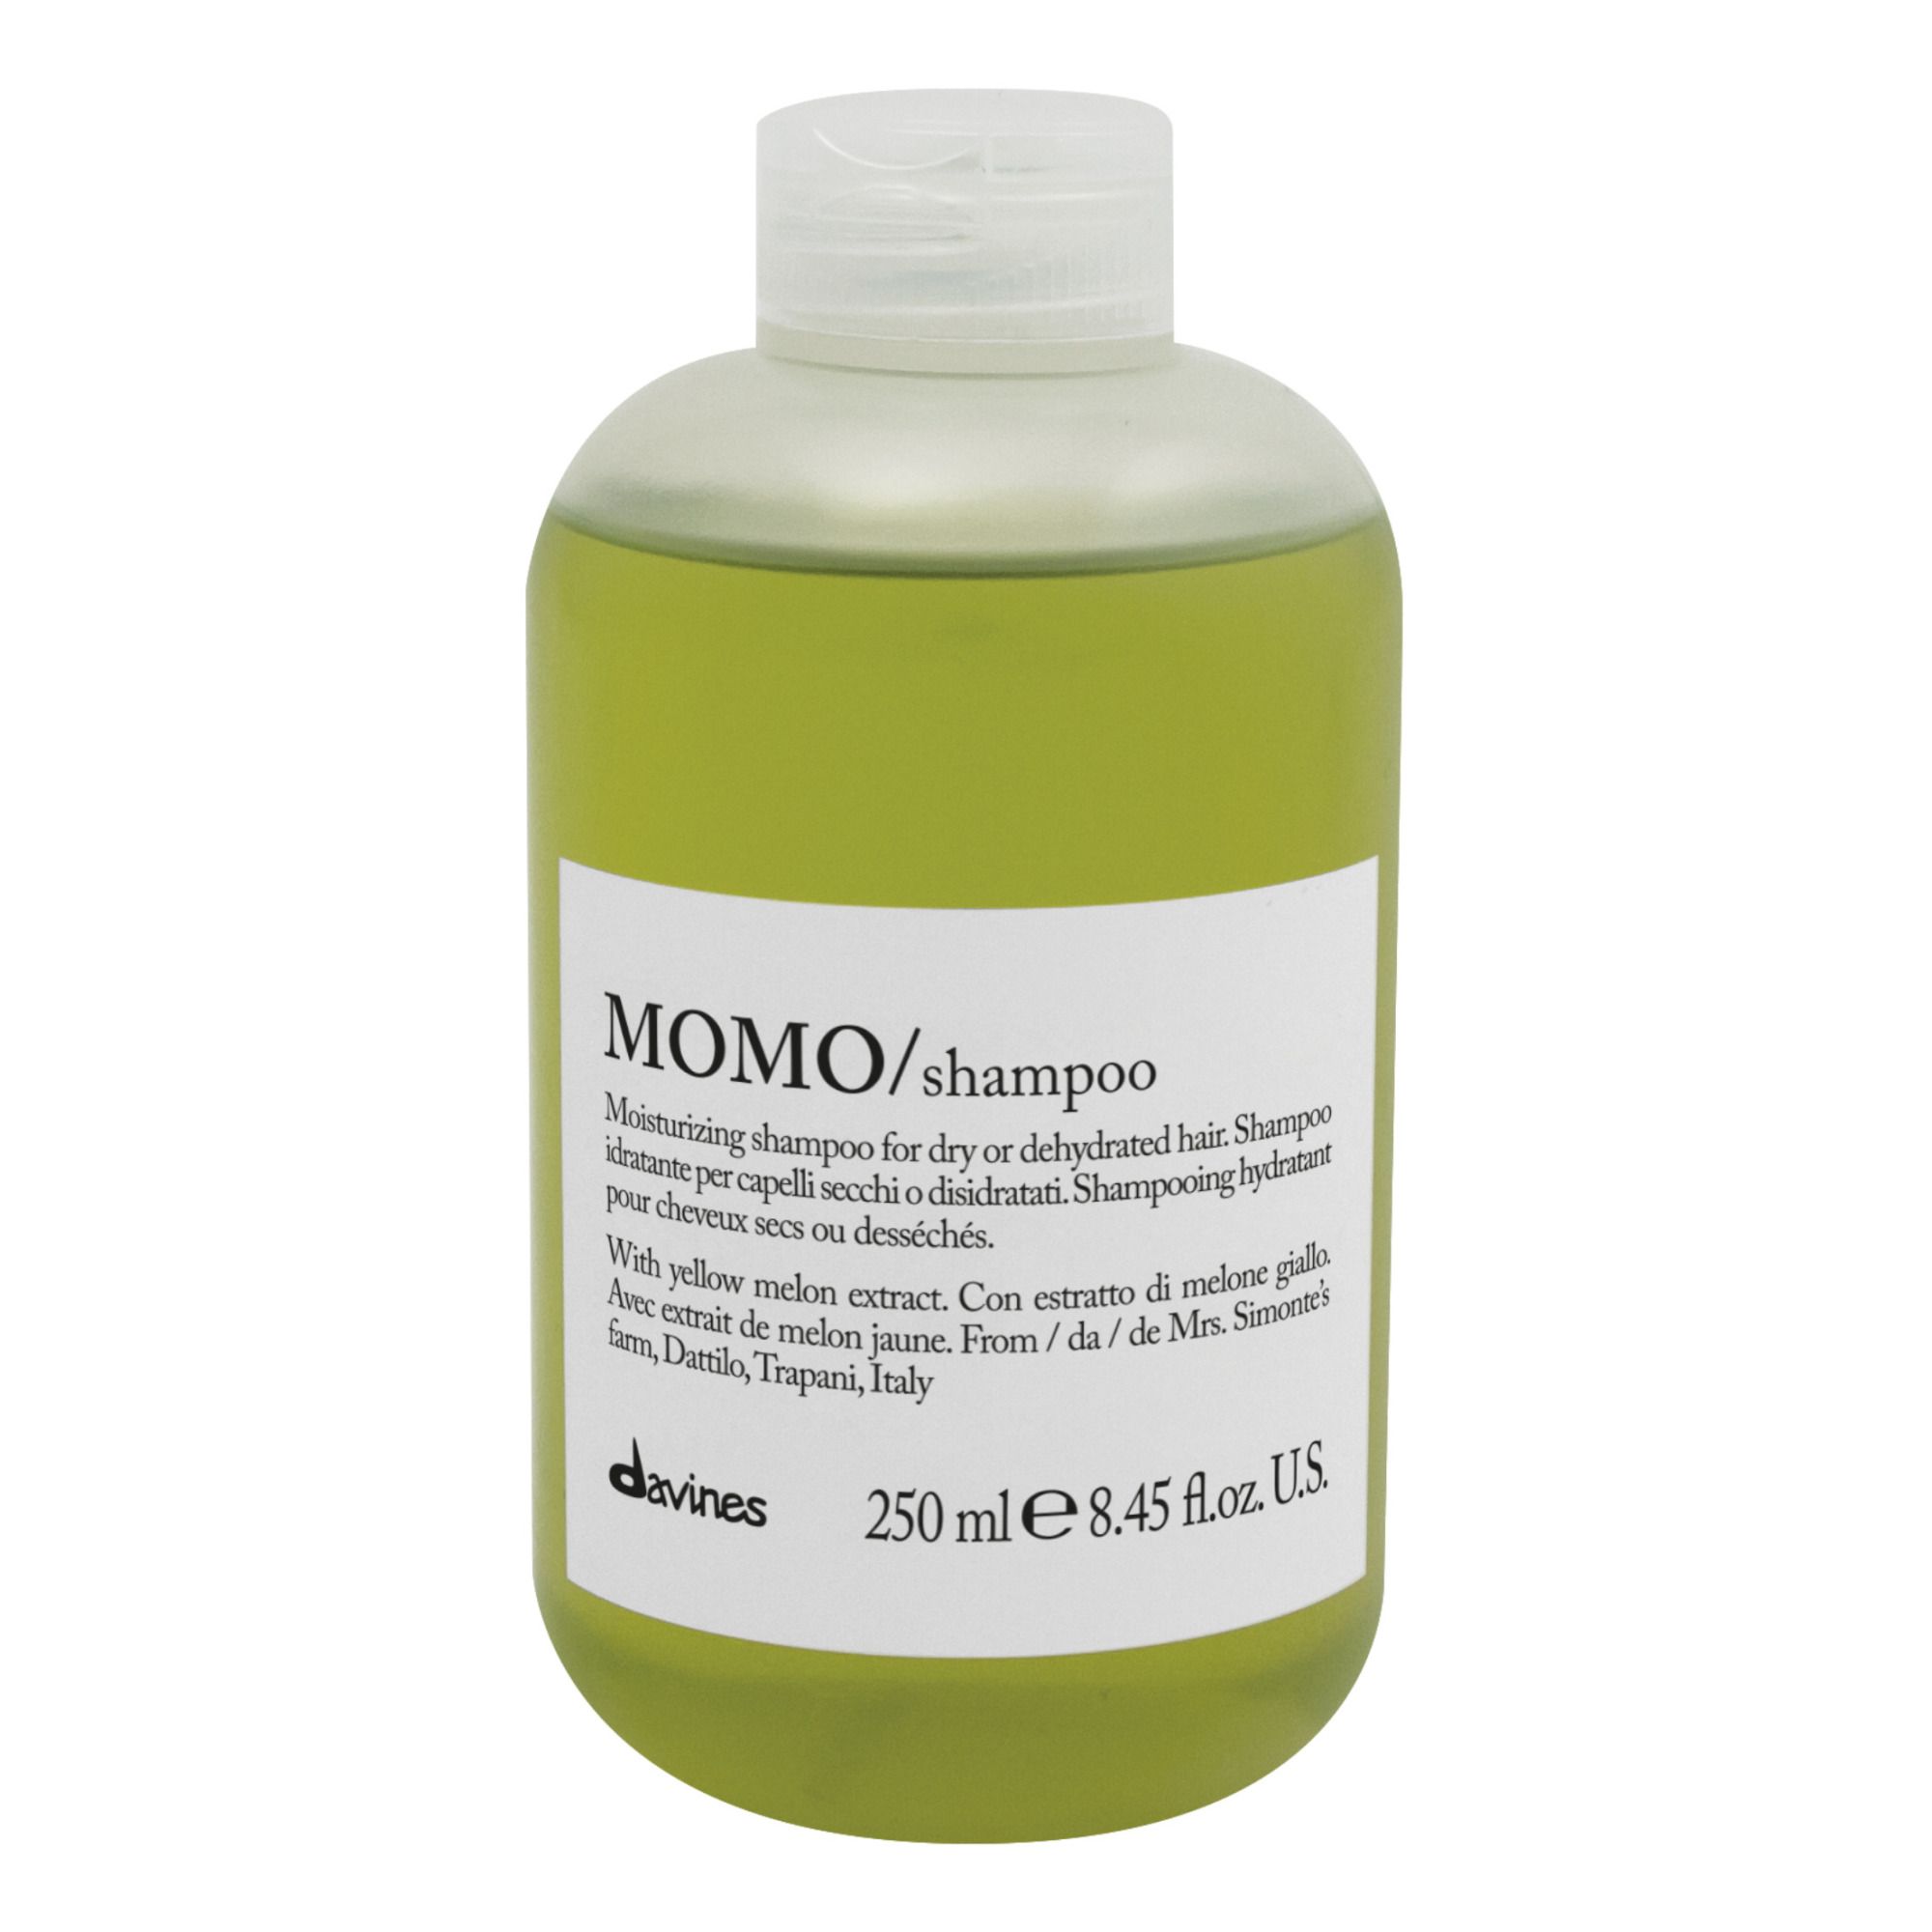 Davines - Shampoing hydratant pour cheveux secs Momo -250ml - Blanc